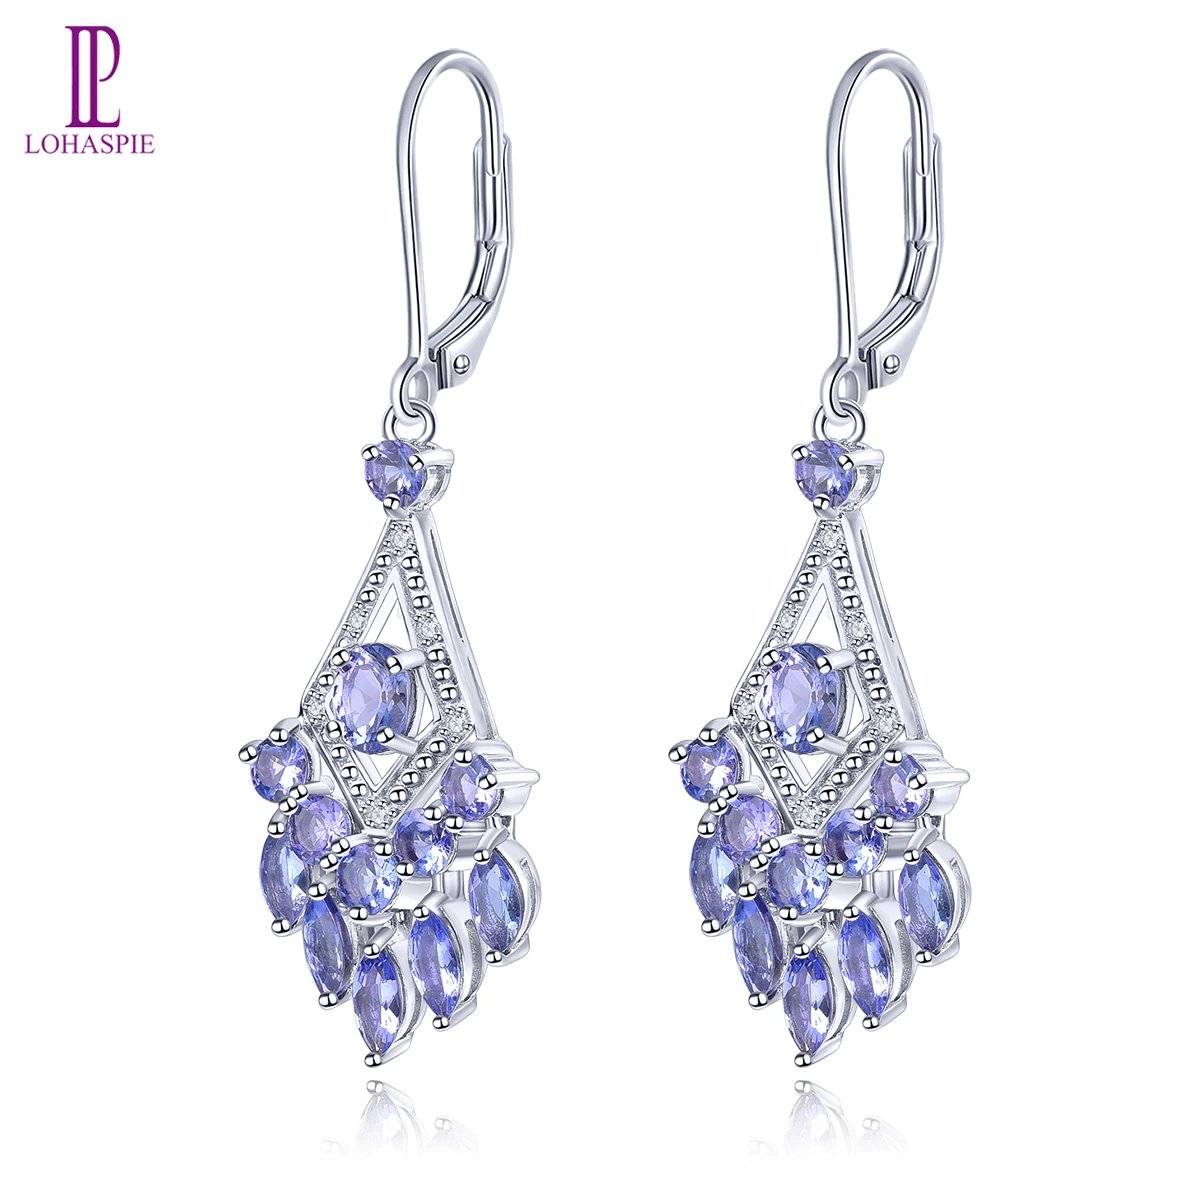 

Lohaspie Natural Genuine Tanzanite Sterling Silver Drop Earrings 3.3 Carats Gemstone S925 Jewelry Romantic Engagement Wedding